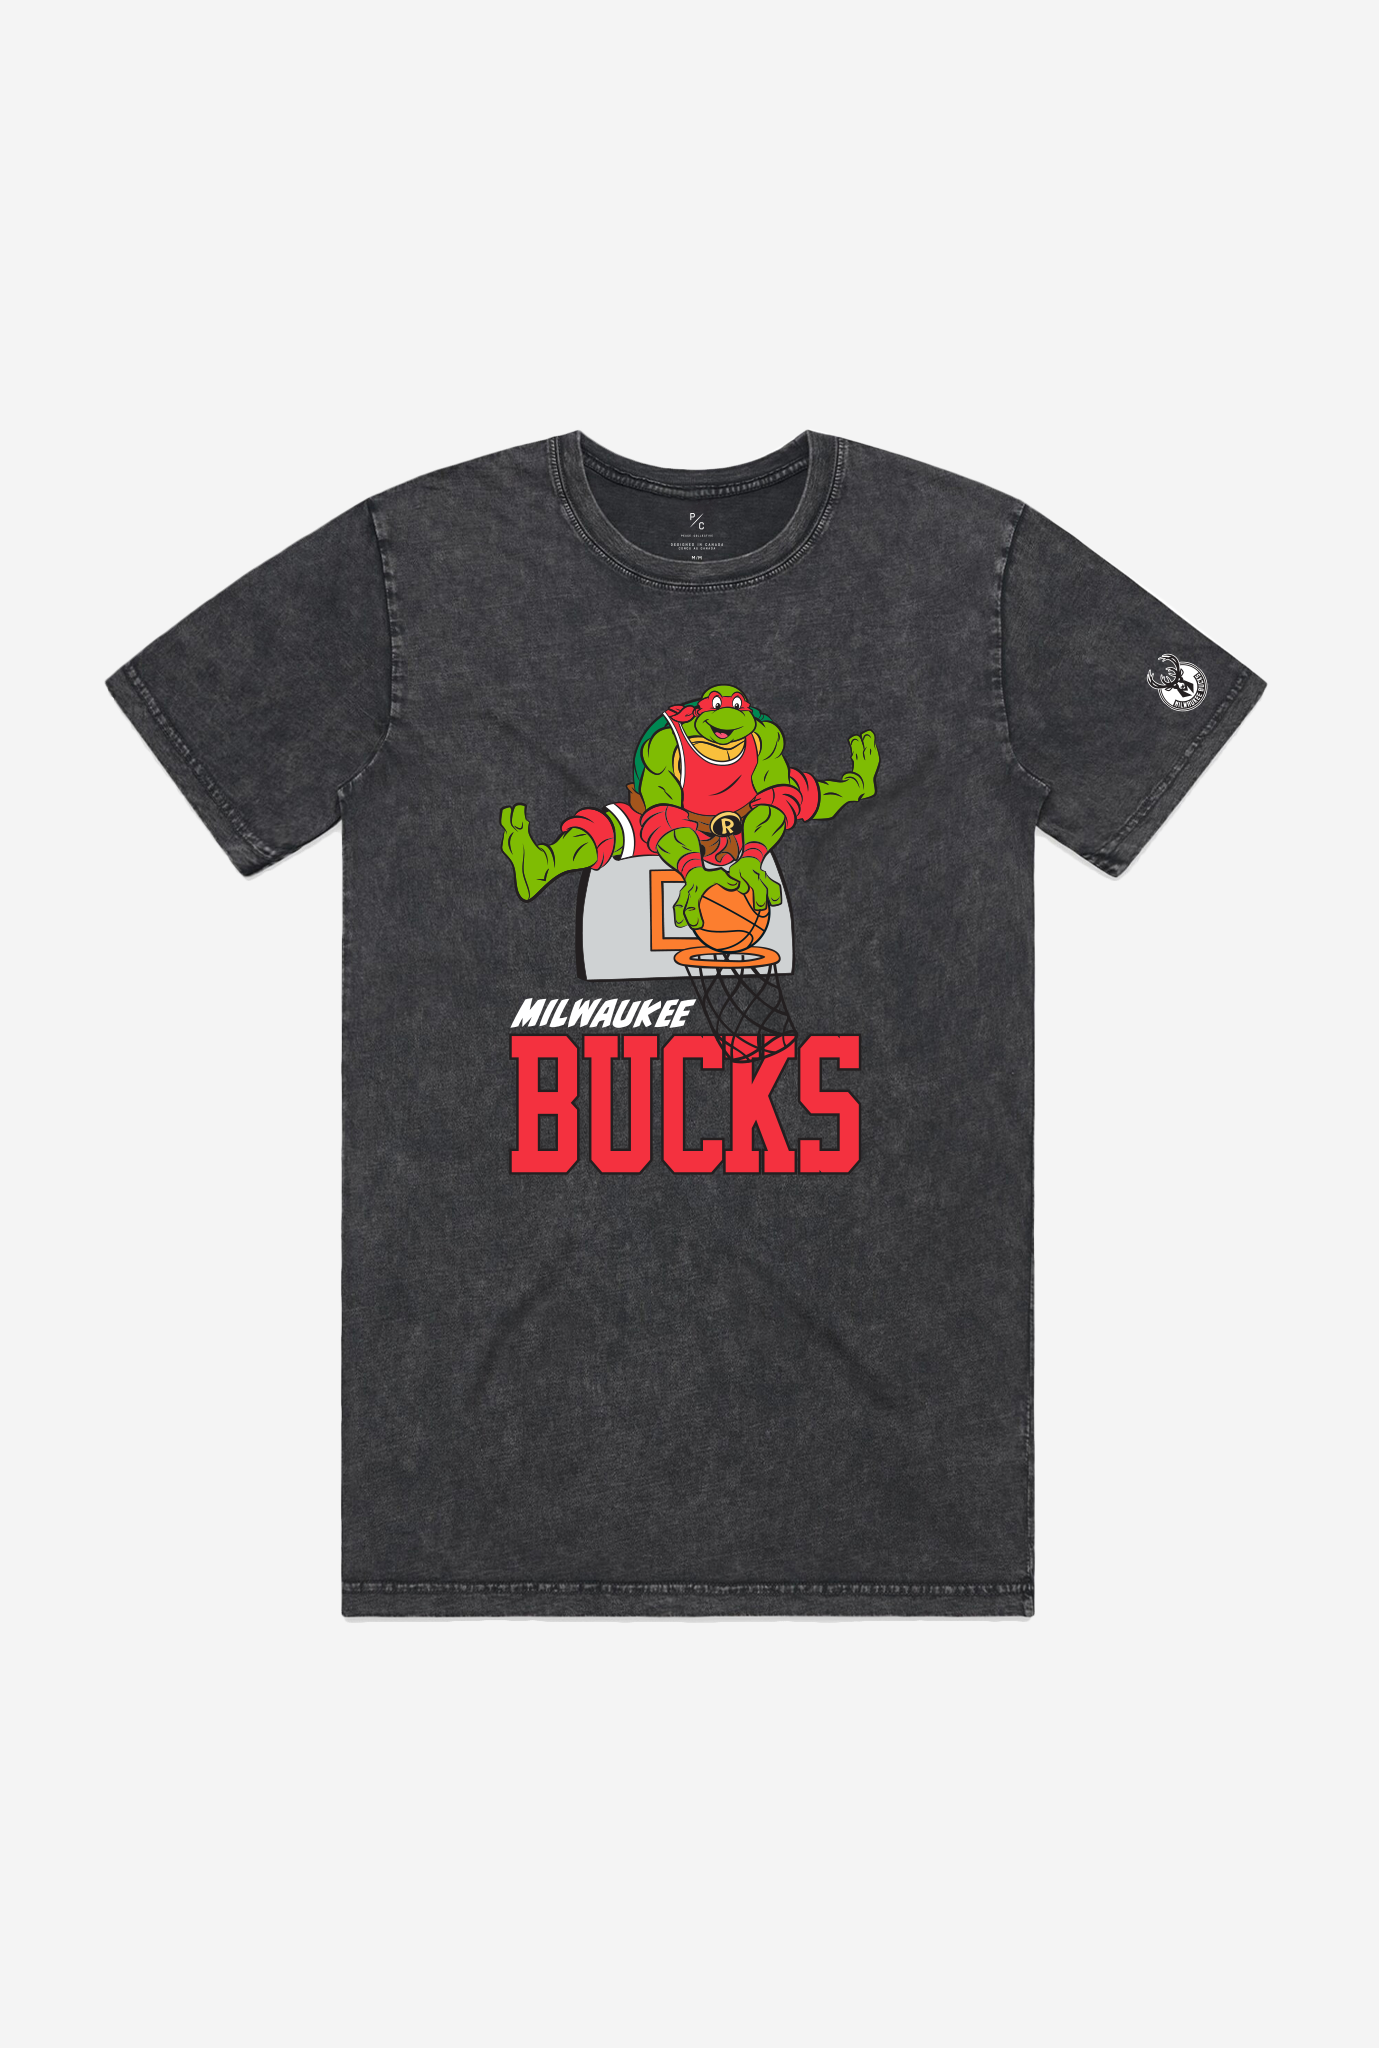 P/C x TMNT Milwaukee Bucks Stonewash T-Shirt - Black